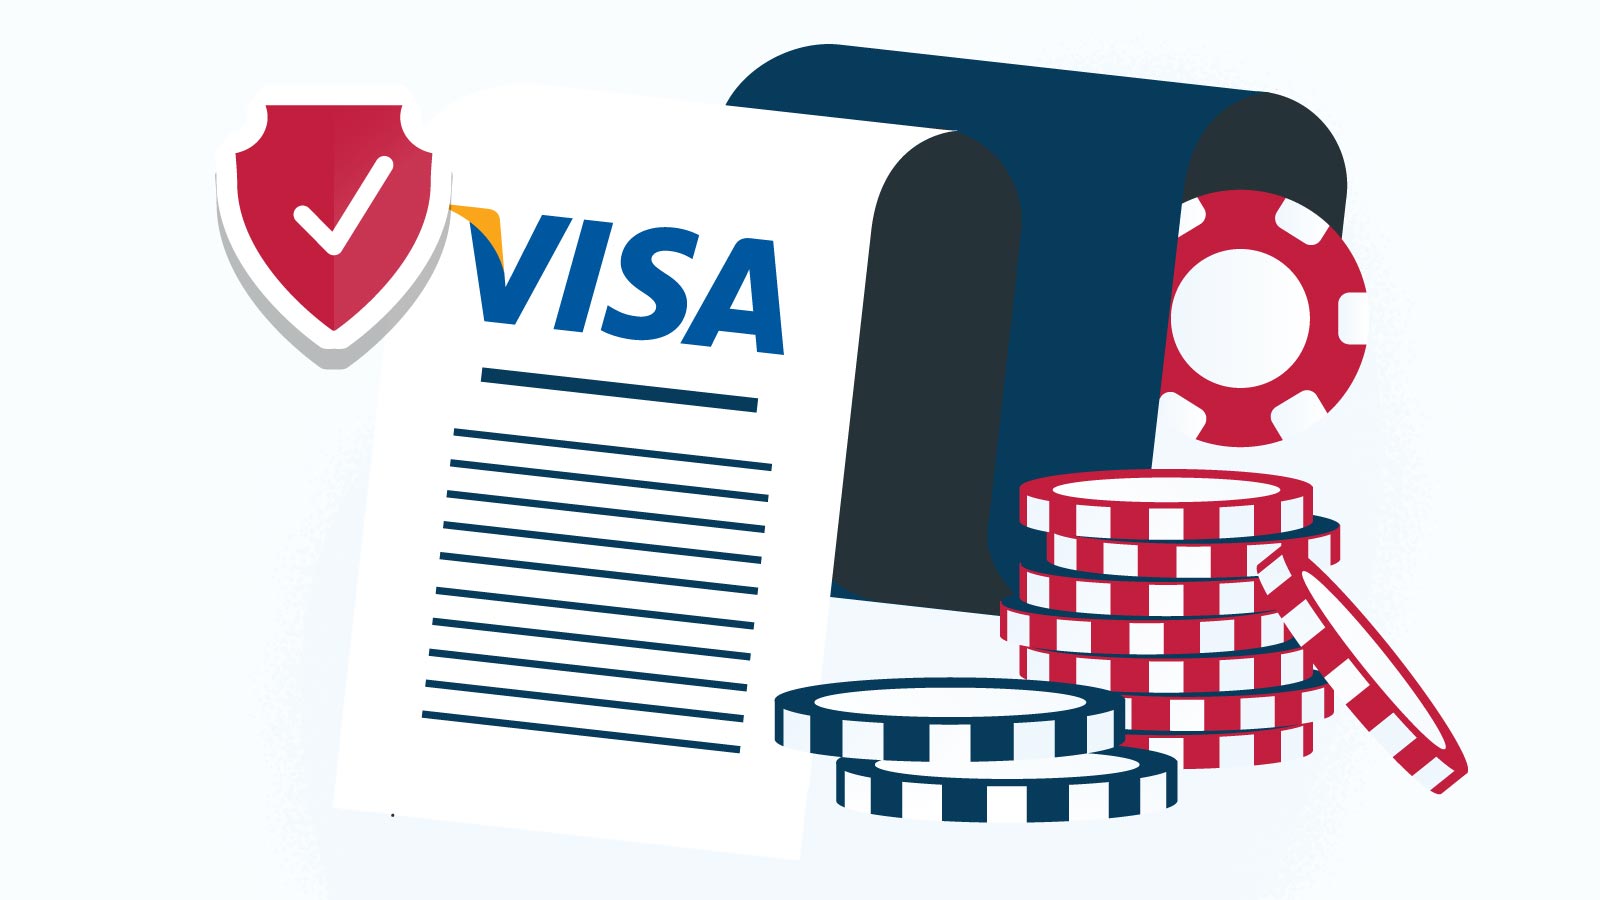 What casinos accept Visa